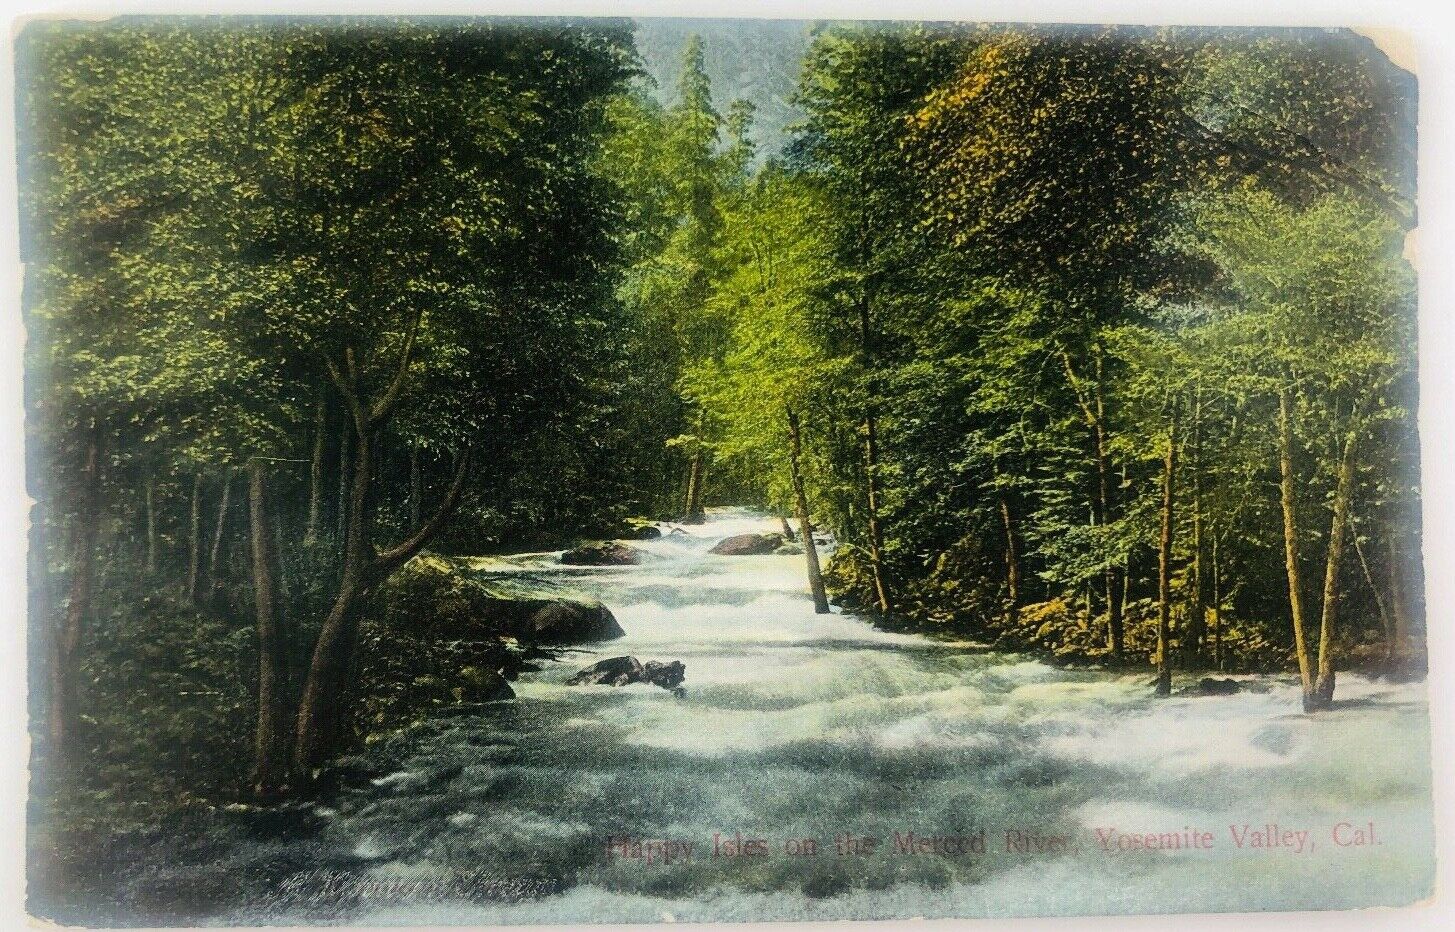 Vtg Yosemite Valley California CA Happy Isles on the Merced River Postcard 1909